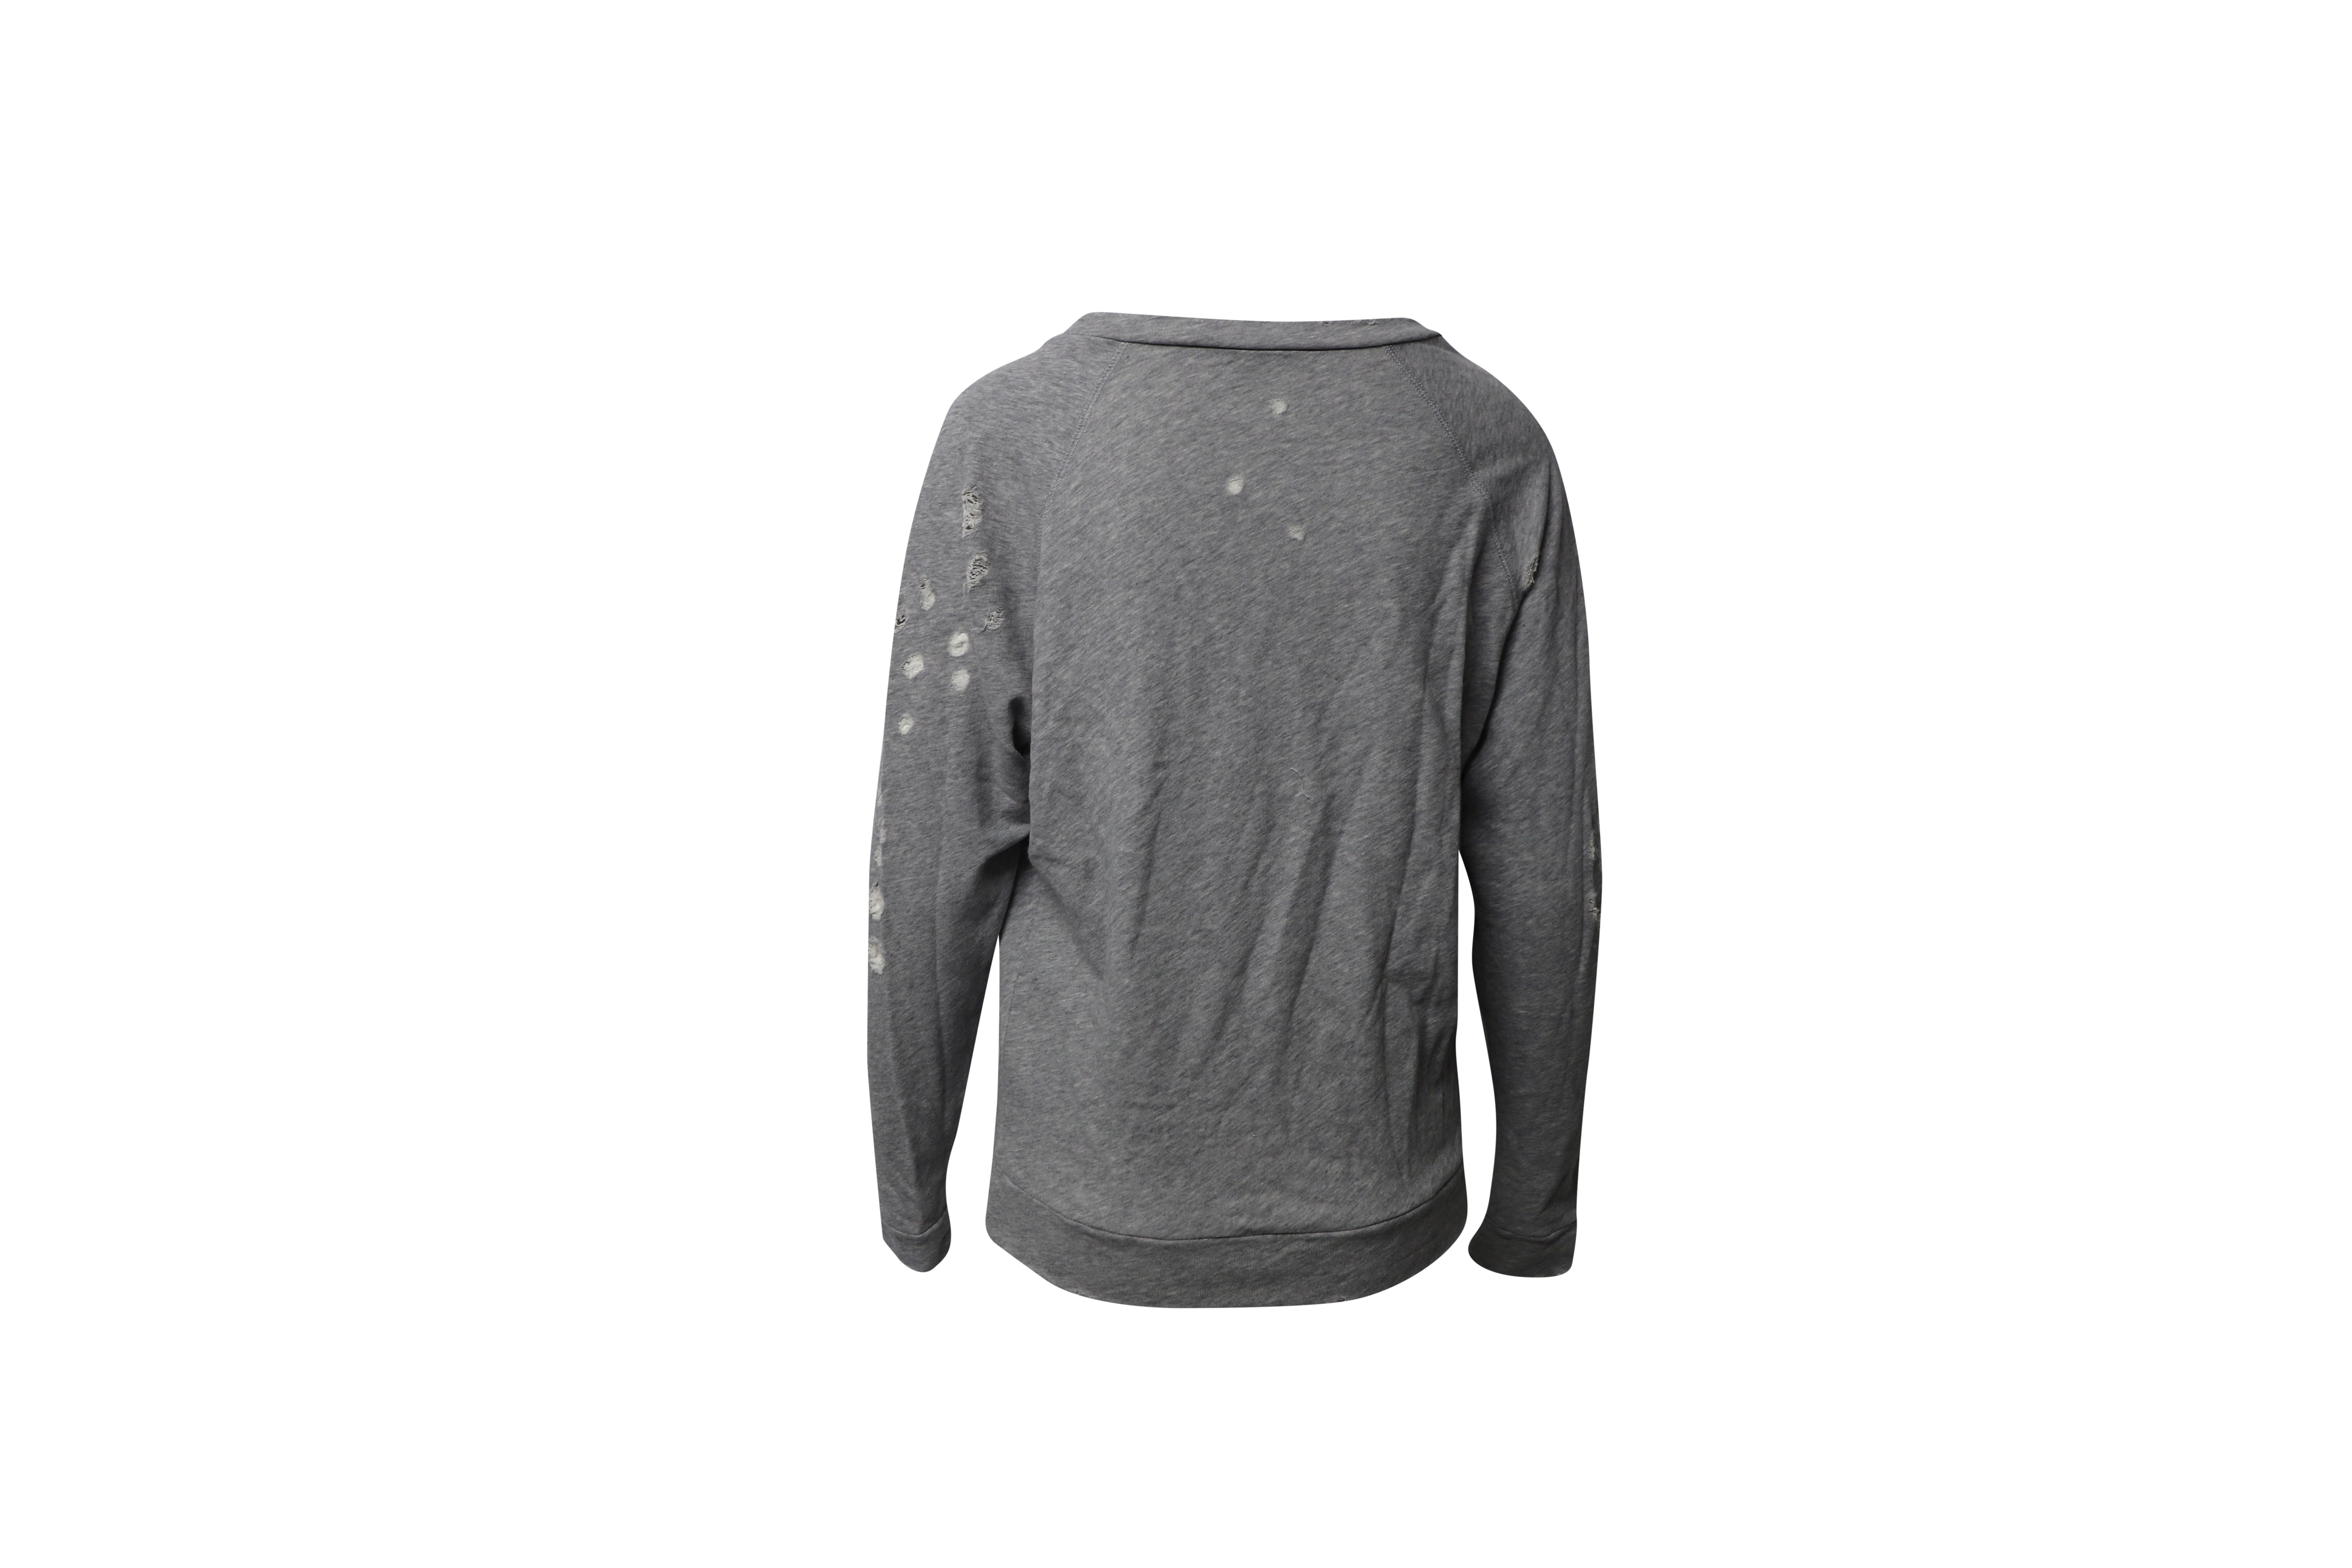 Distressed Grey Cotton Sweatshirt